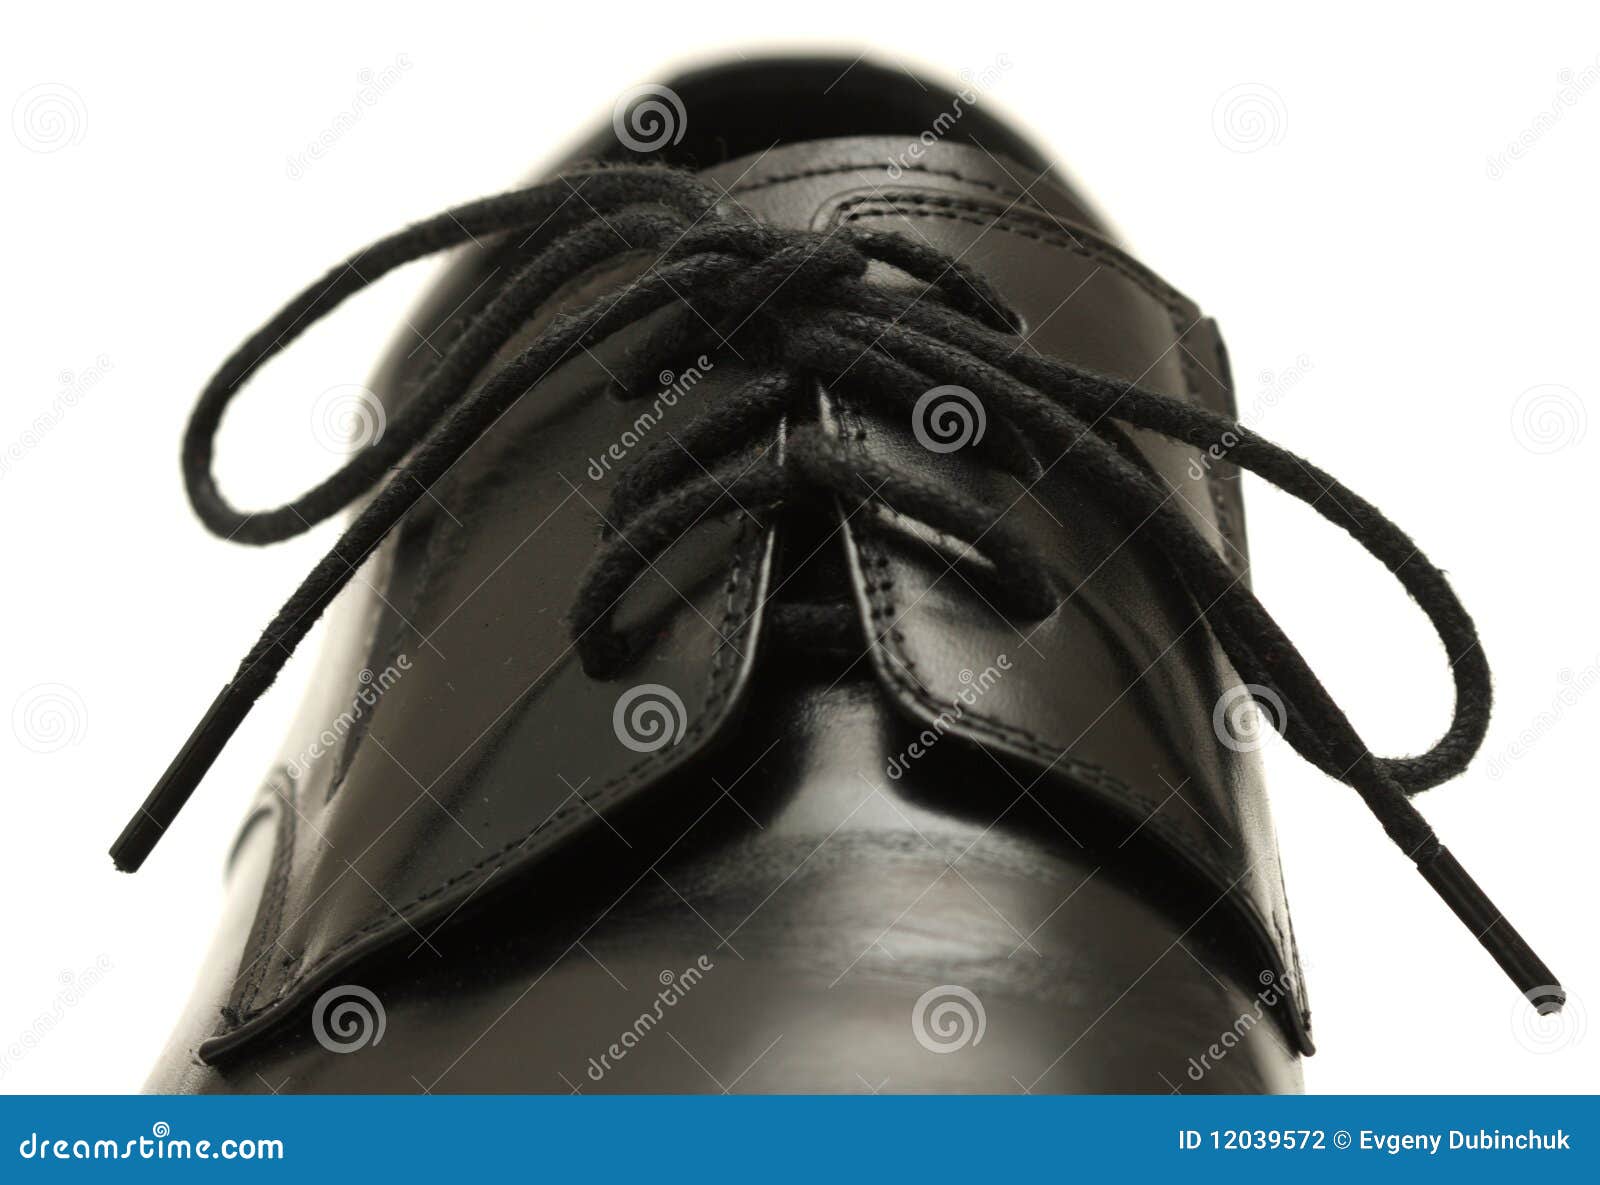 Classic Black Men S Shoe on White Background Stock Photo - Image of ...